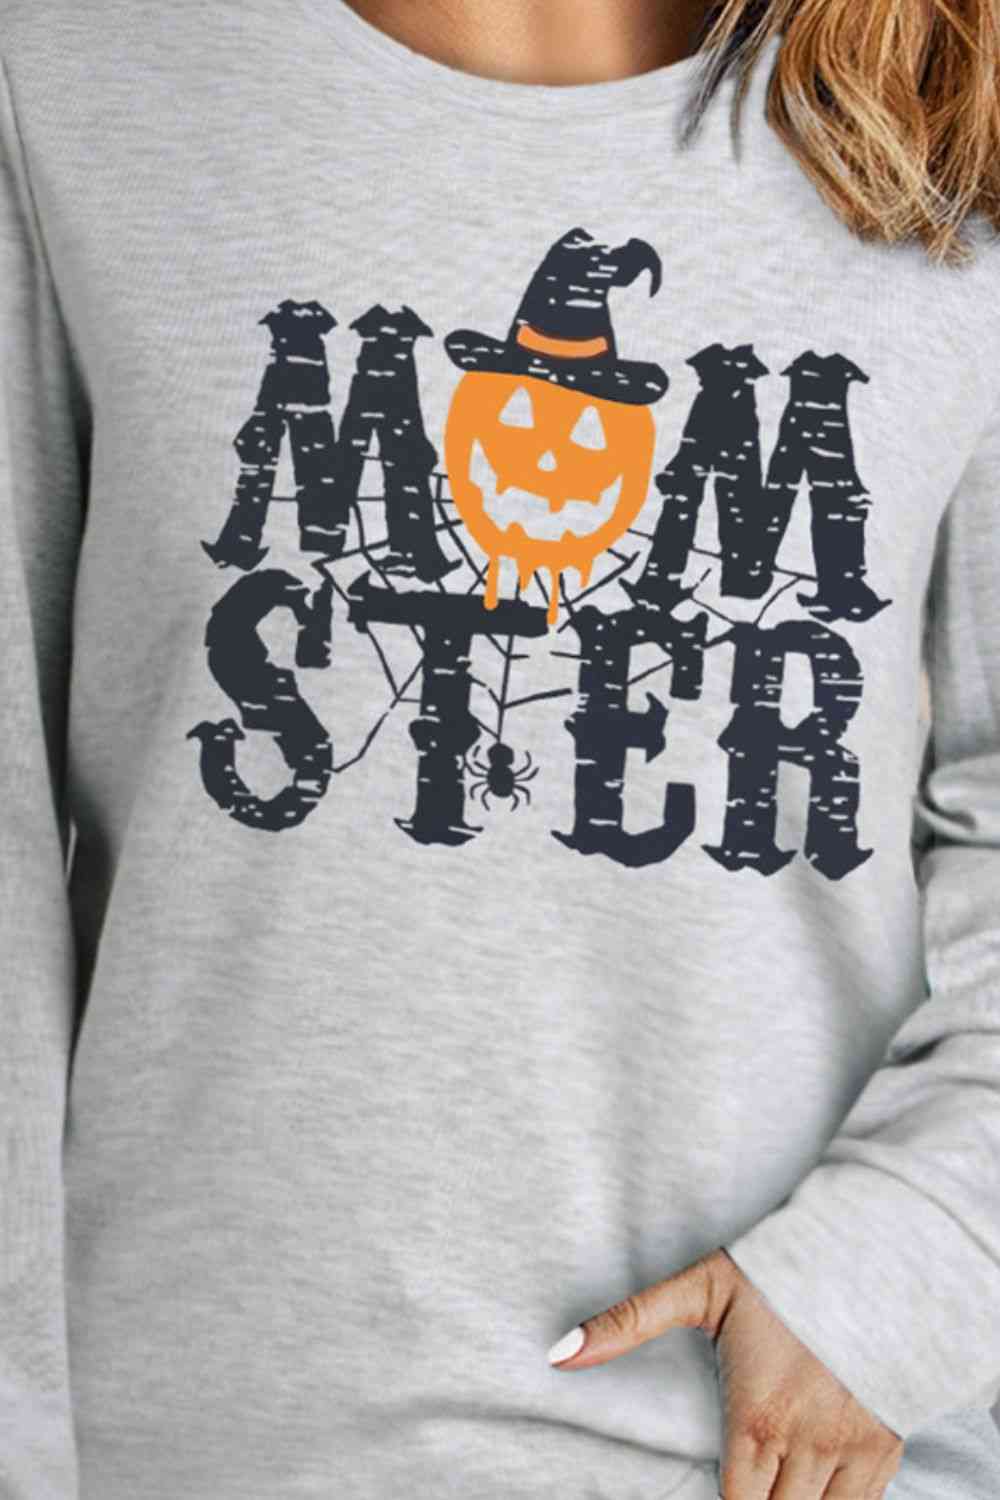 MOMSTER Round Neck Long Sleeve Graphic Sweatshirt